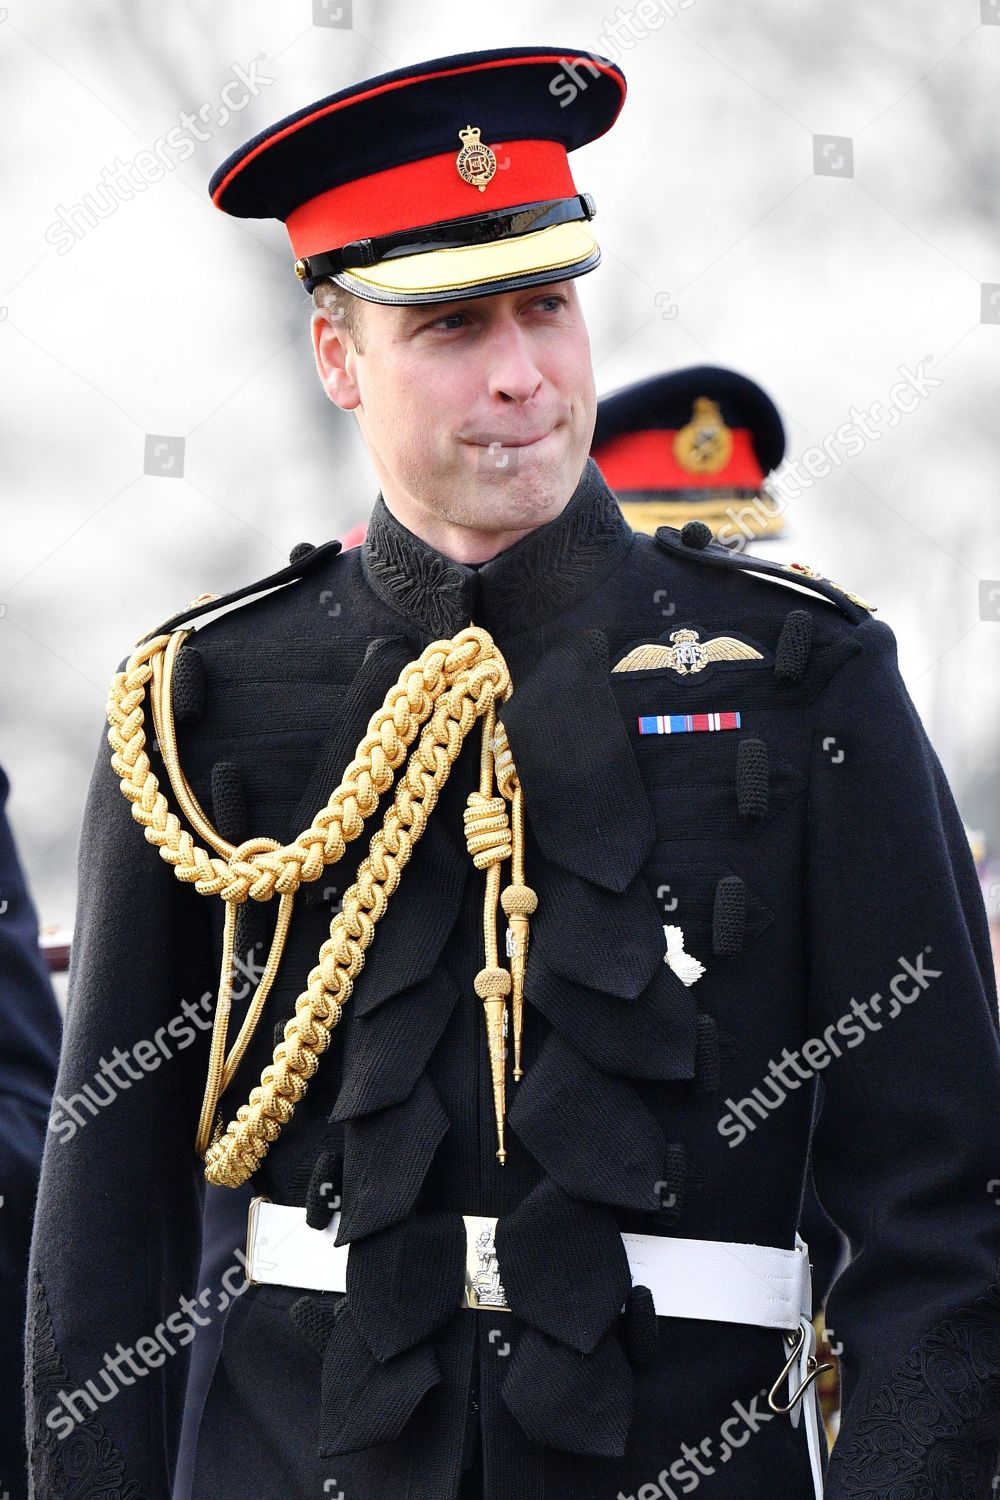 sovereigns-parade-at-the-royal-military-academy-sandhurst-berkshire-uk-shutterstock-editorial-10033849w.jpg